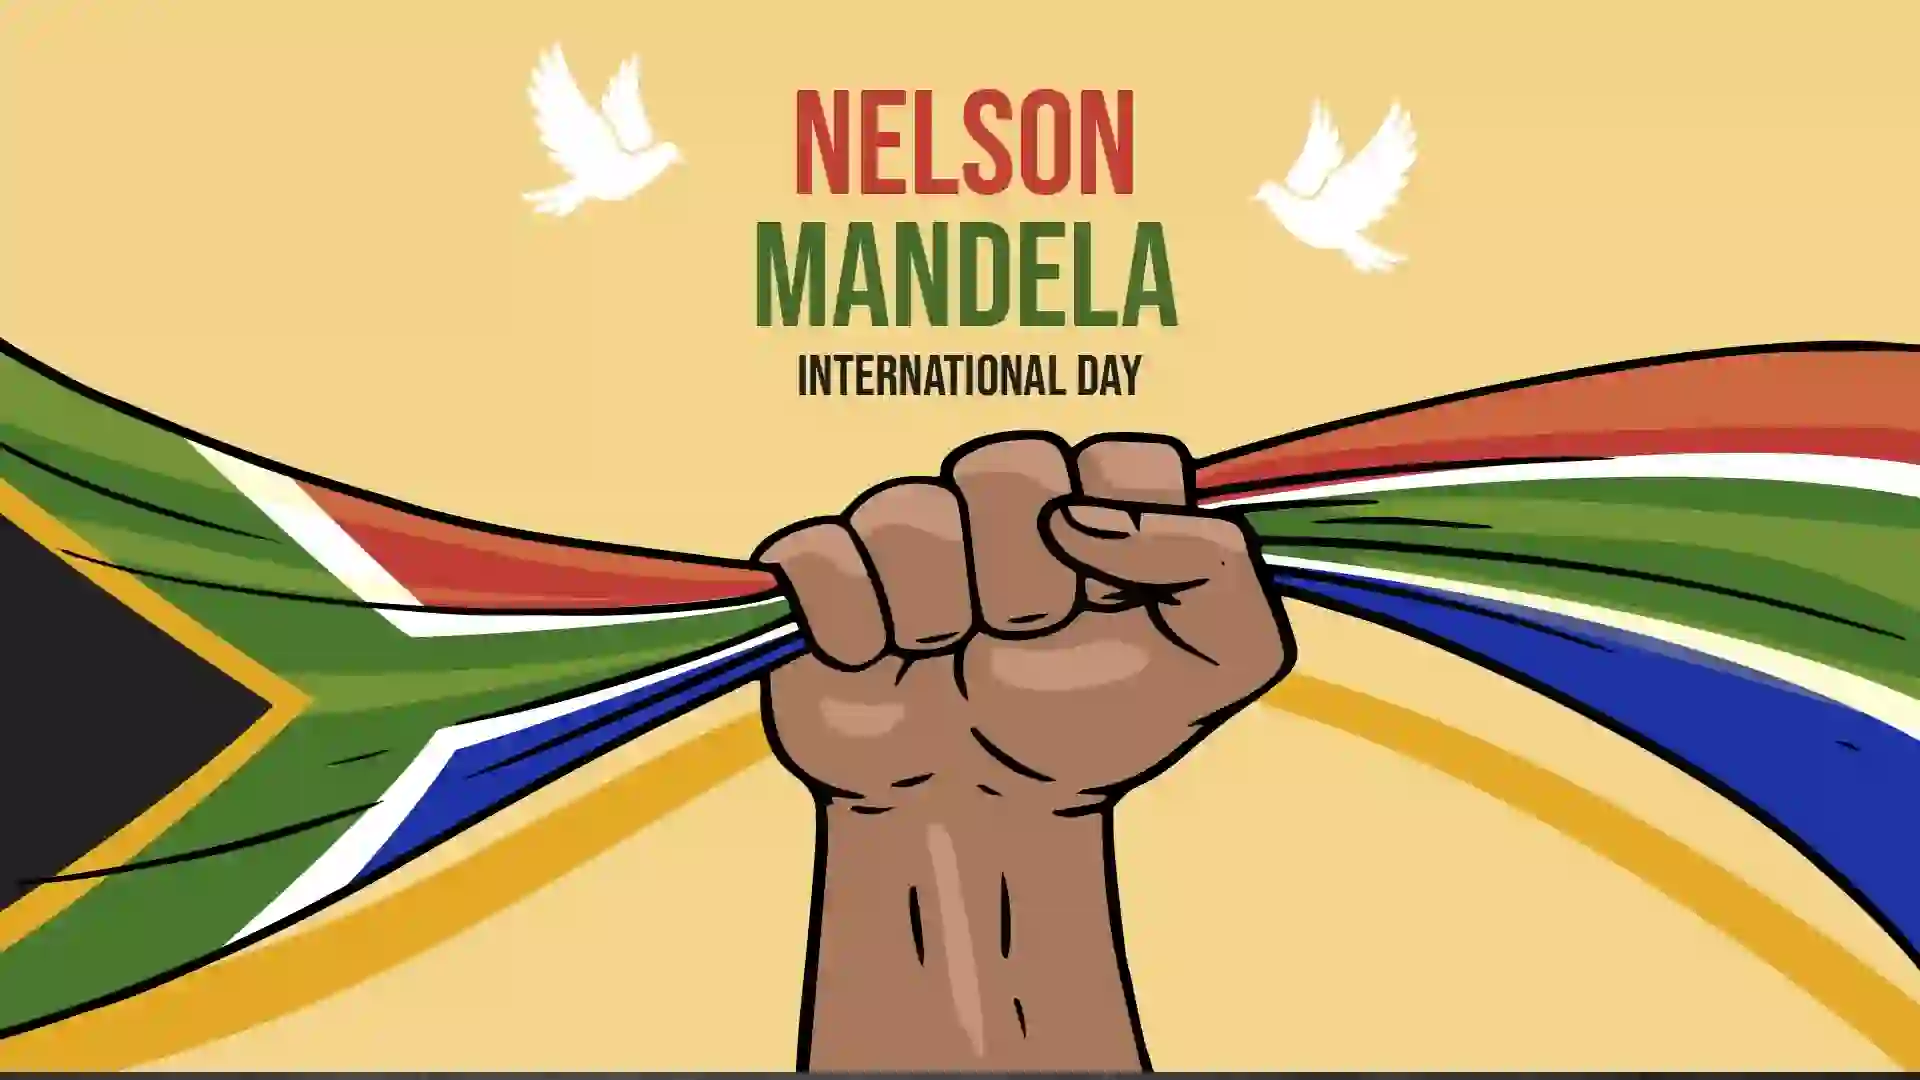 Nelson Mandela International Day This Post Design By The Revolution Deshbhakt Hindustani